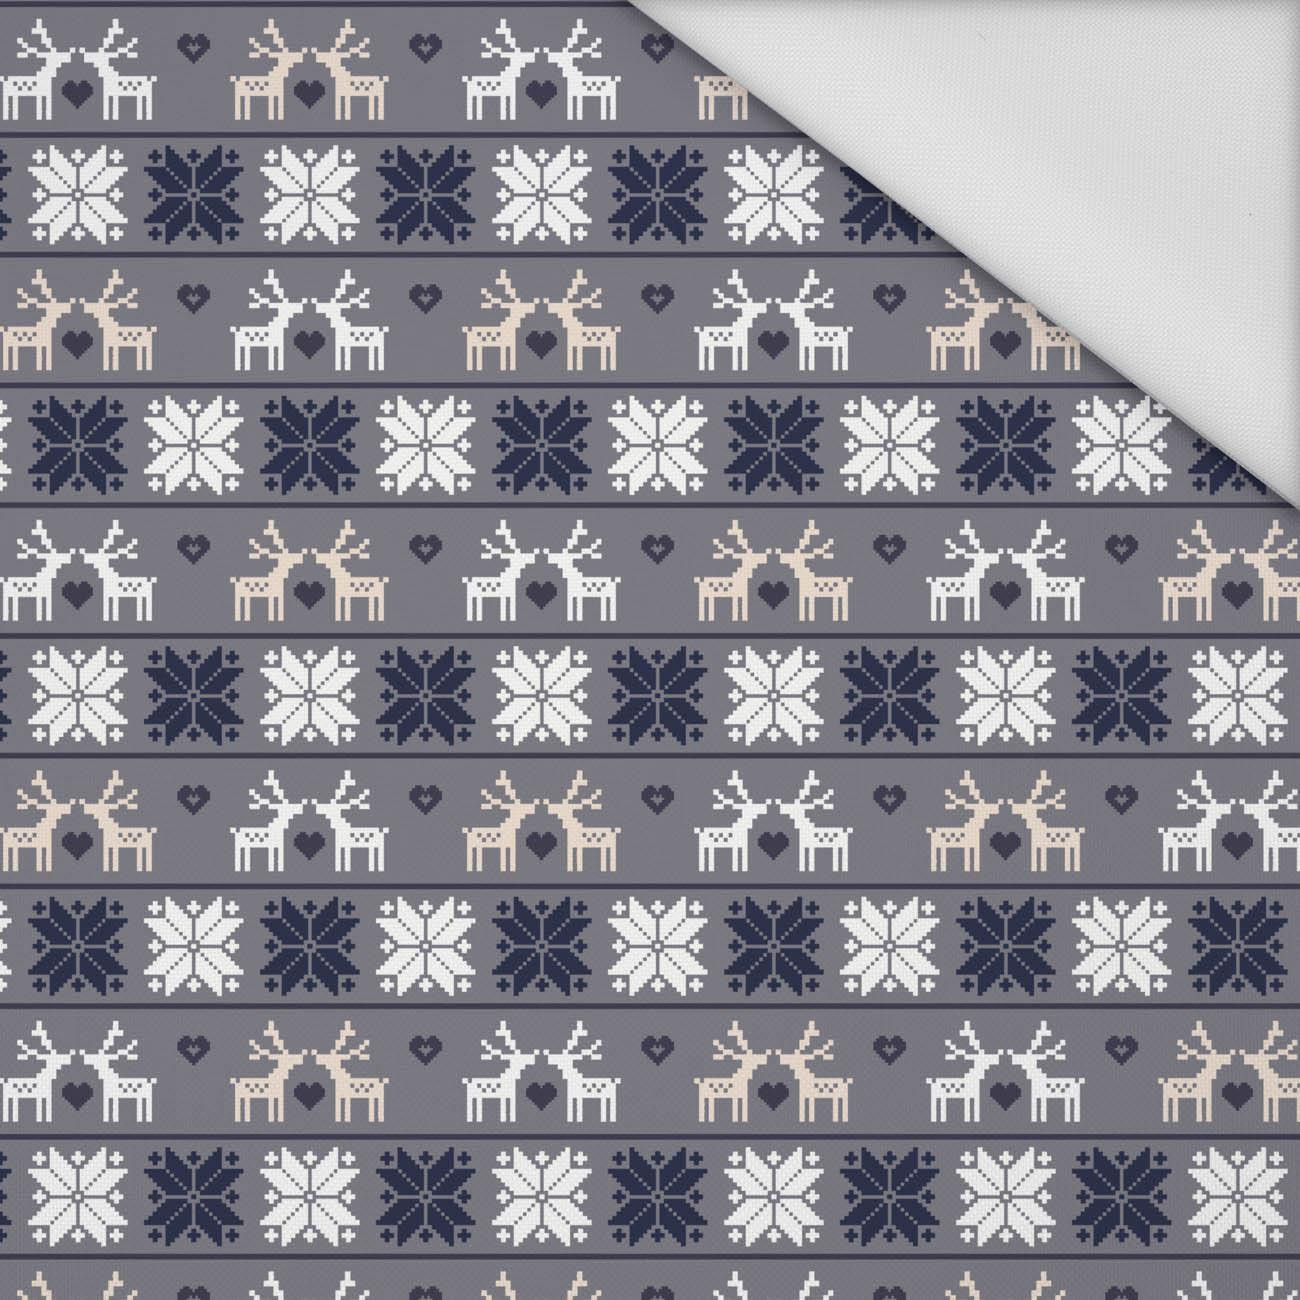 REINDEERS / sweater (WINTER TIME) / grey - Waterproof woven fabric